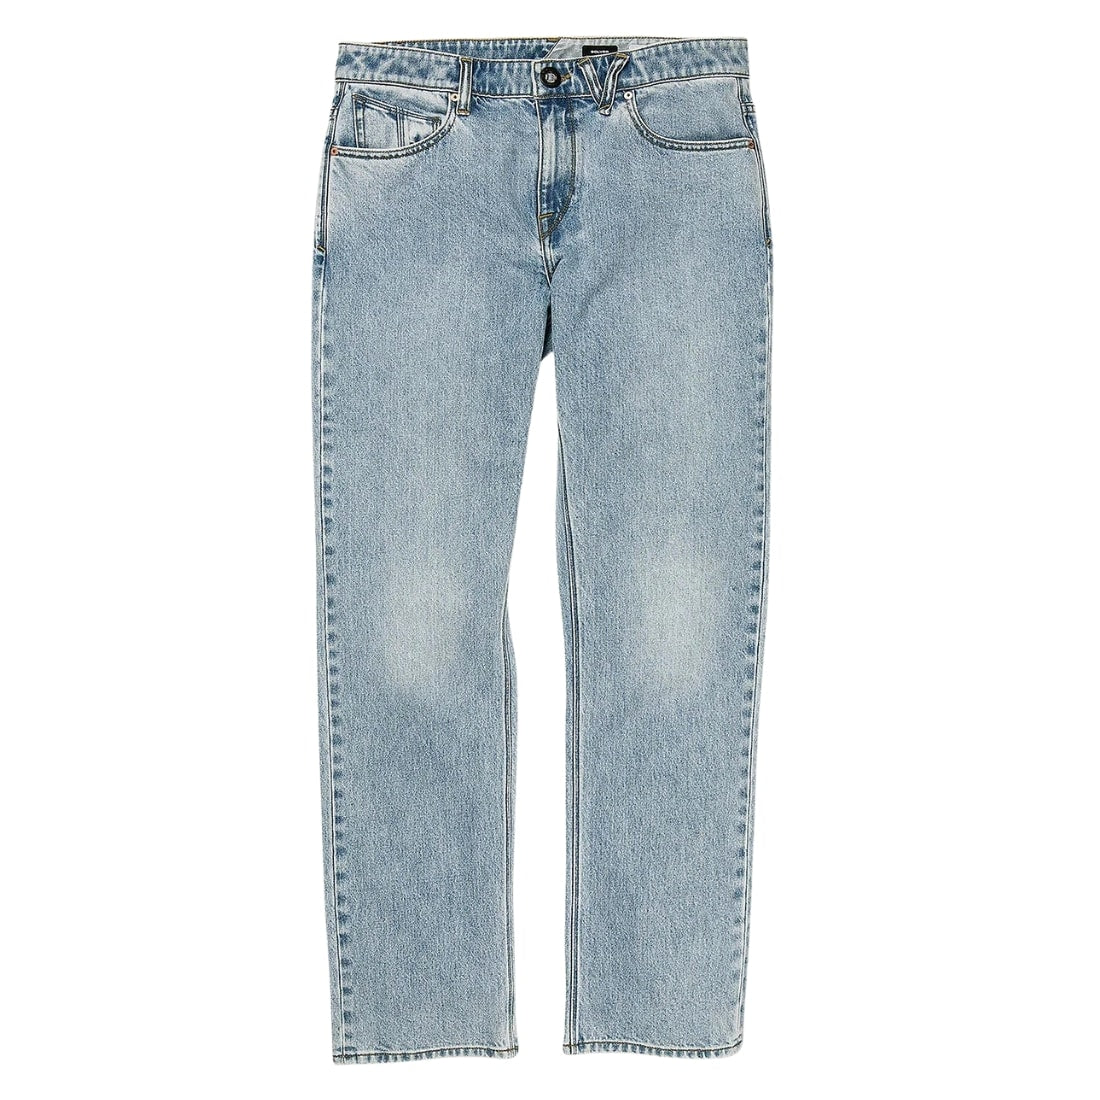 Volcom Solver Denim - Heavy Worn Faded - Mens Regular/Straight Denim Jeans by Volcom